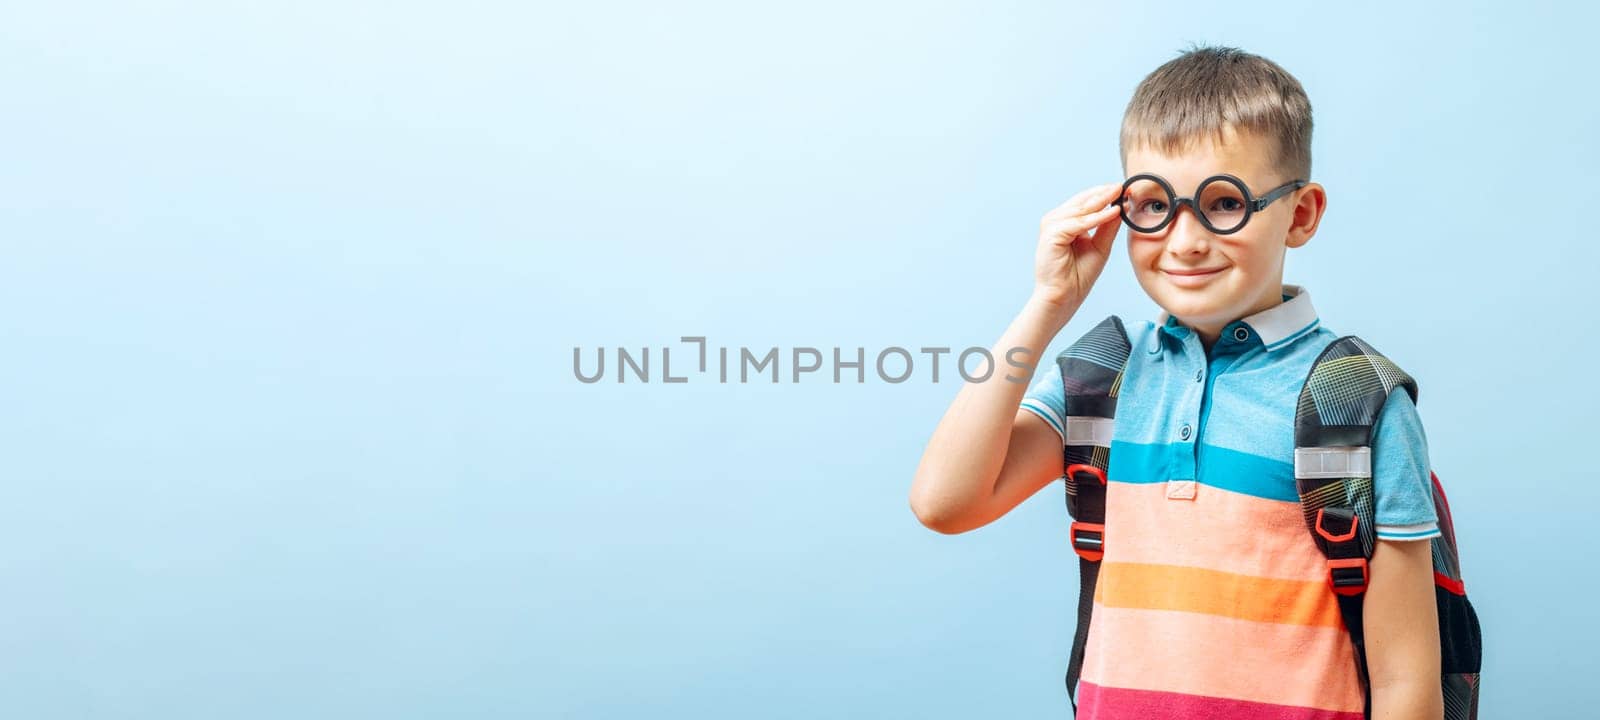 Positive elementary school nerd boy in eyeglasses against blue background.